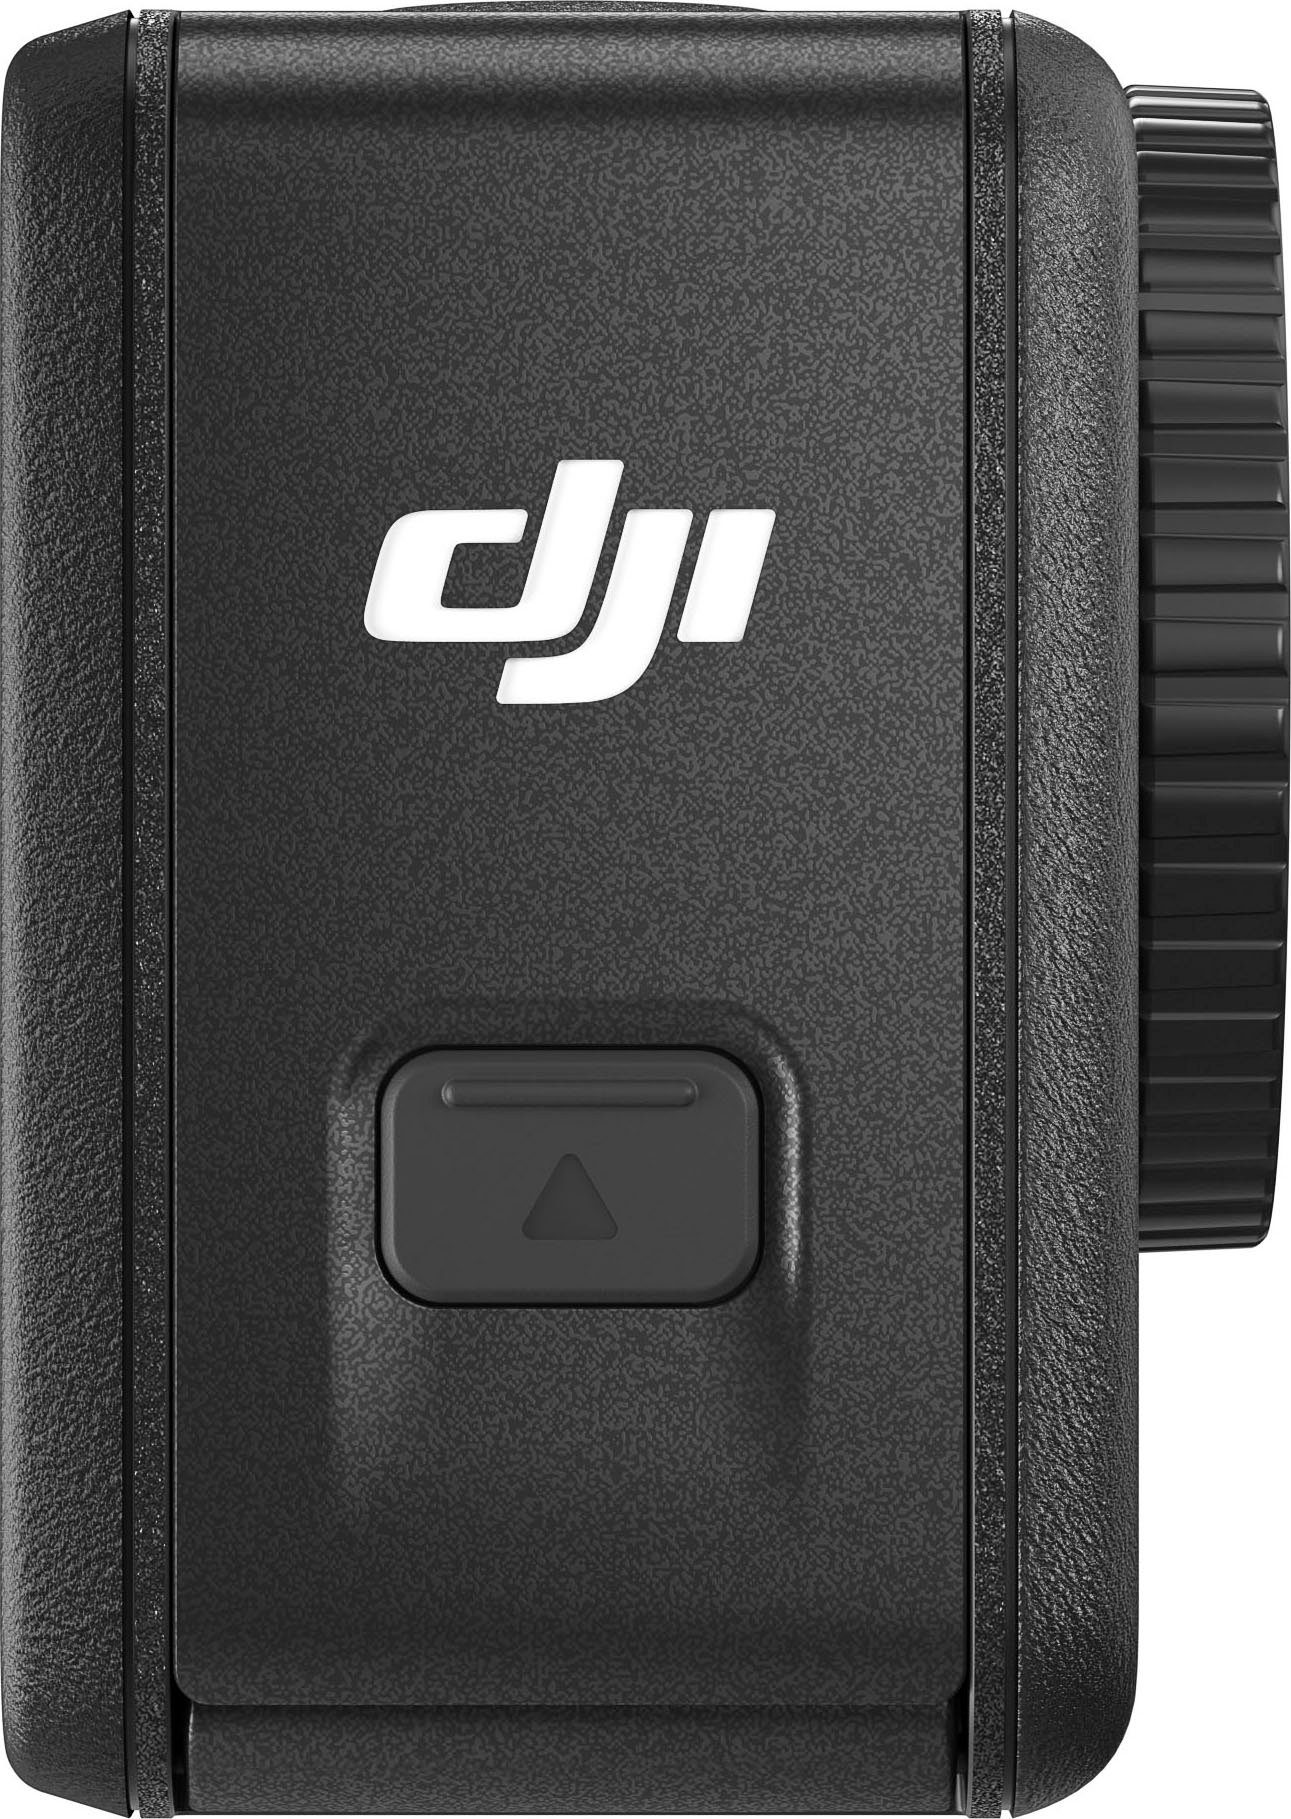 Ultra DJI Osmo 4 (4K Bluetooth, (Wi-Fi) Camcorder Combo Standard HD, WLAN Action